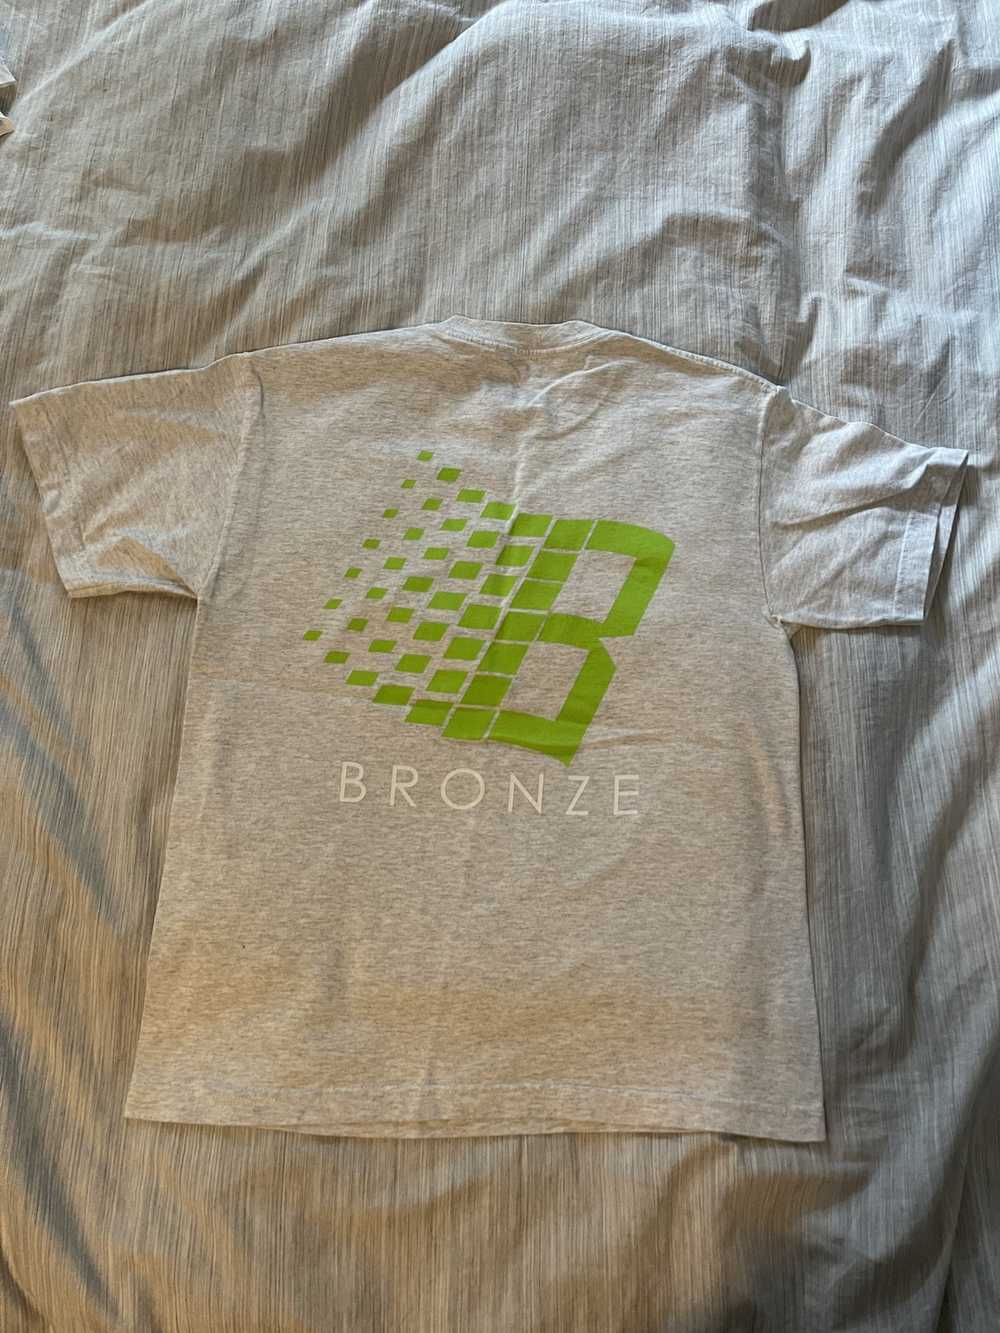 Bronze 56k Bronze 56k T-Shirt - image 2